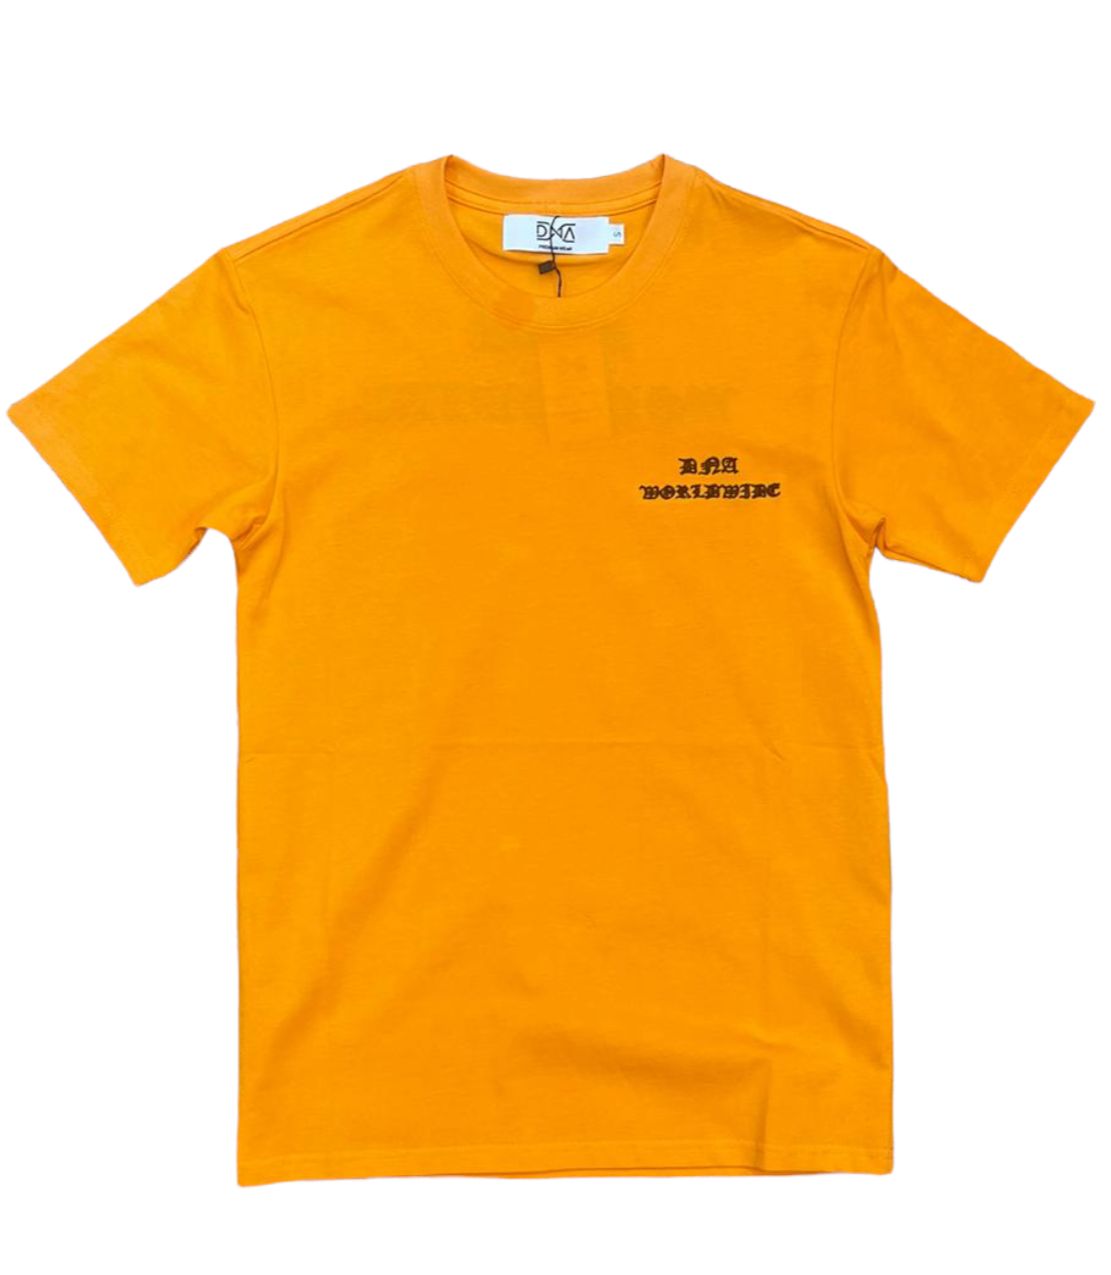 DNA Worldwide Old English T-shirt - Orange